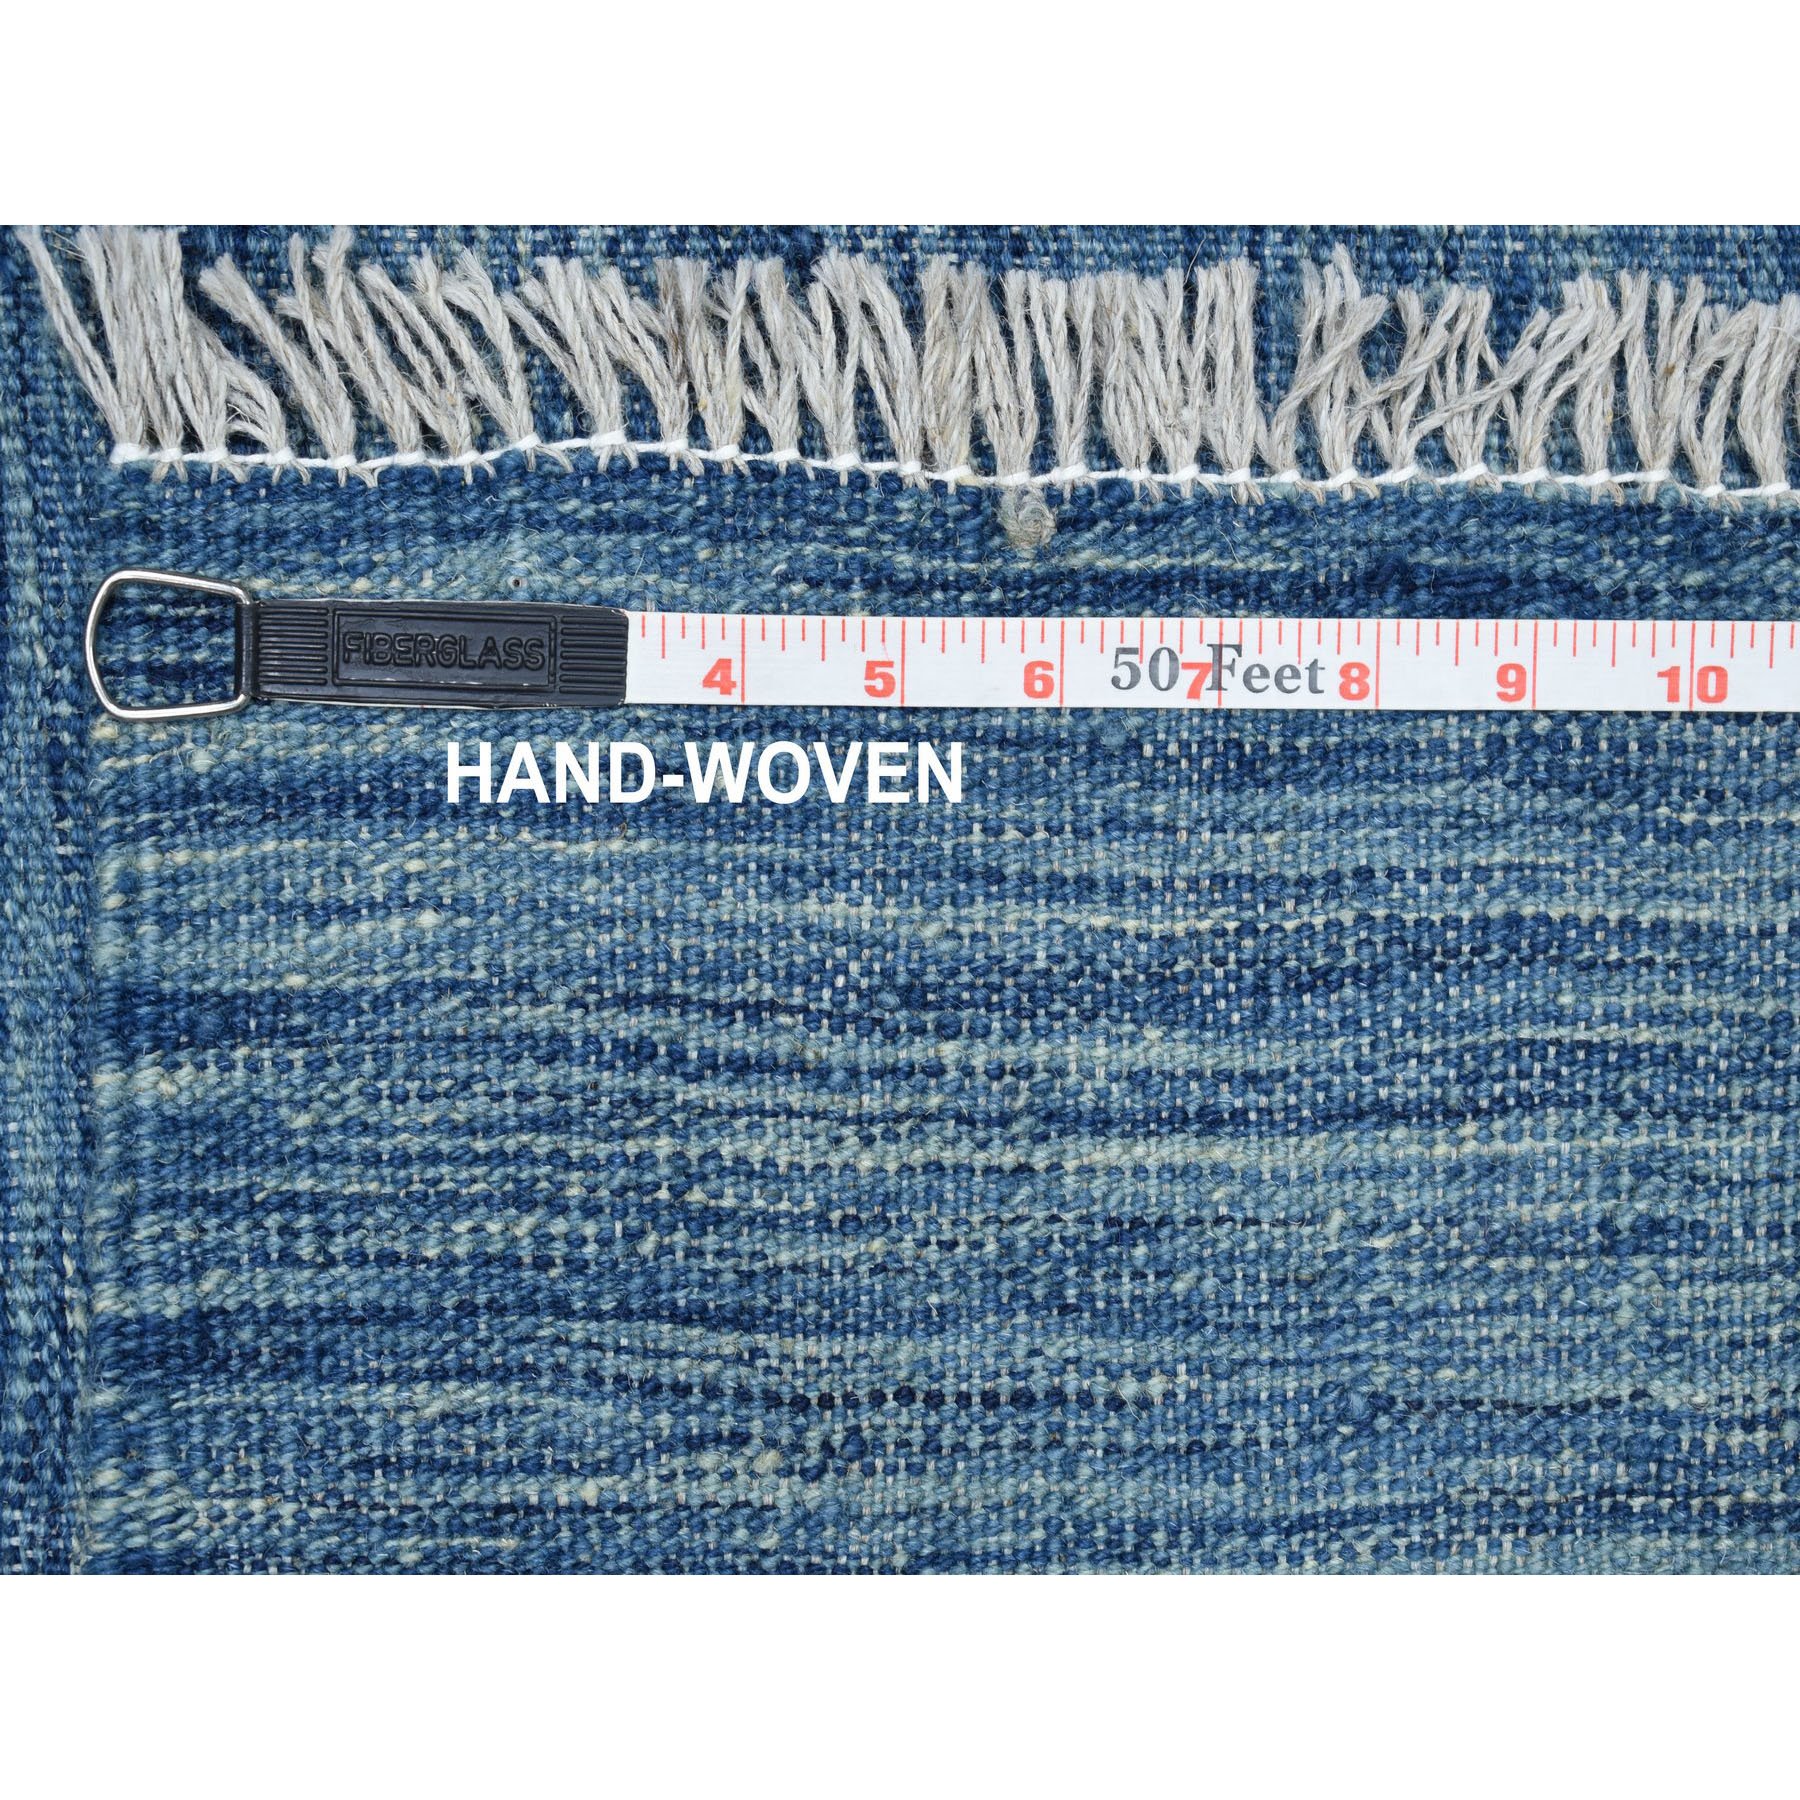 2-9 x9-8  Blue Shades Flat Weave Kilim Pure Wool Hand Woven Runner Oriental Rug 